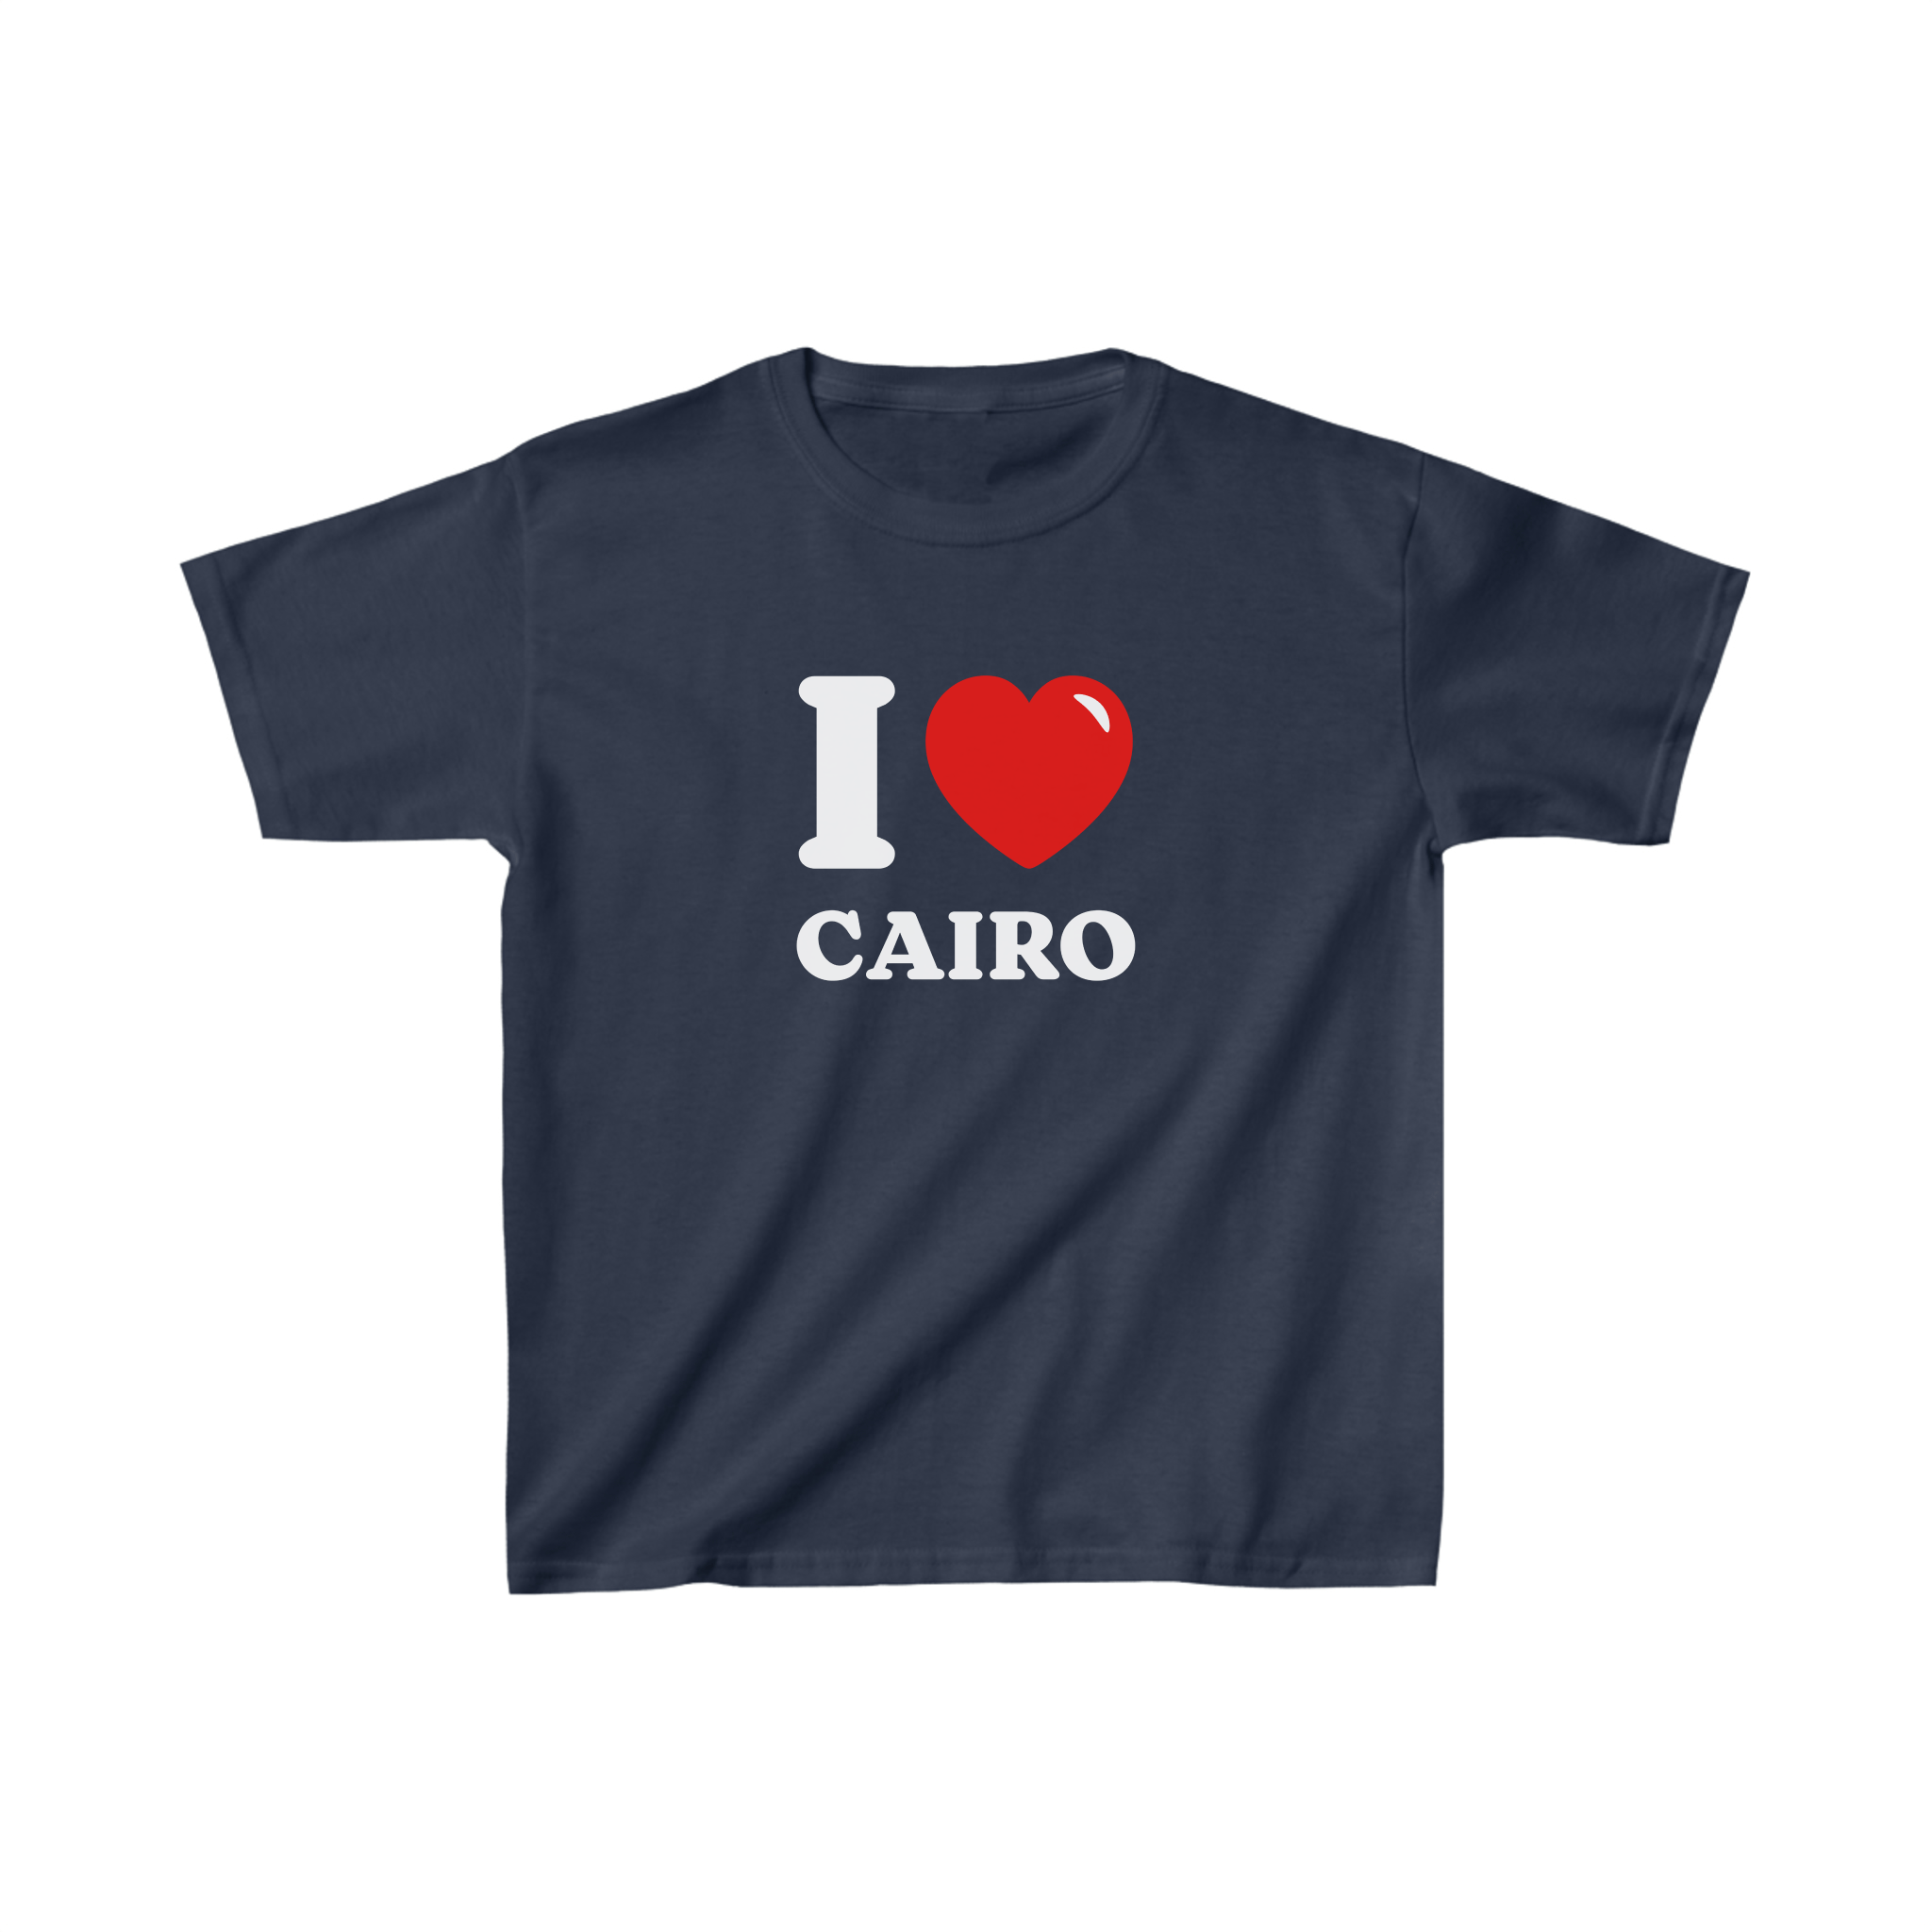 'I love Cairo' baby tee - In Print We Trust